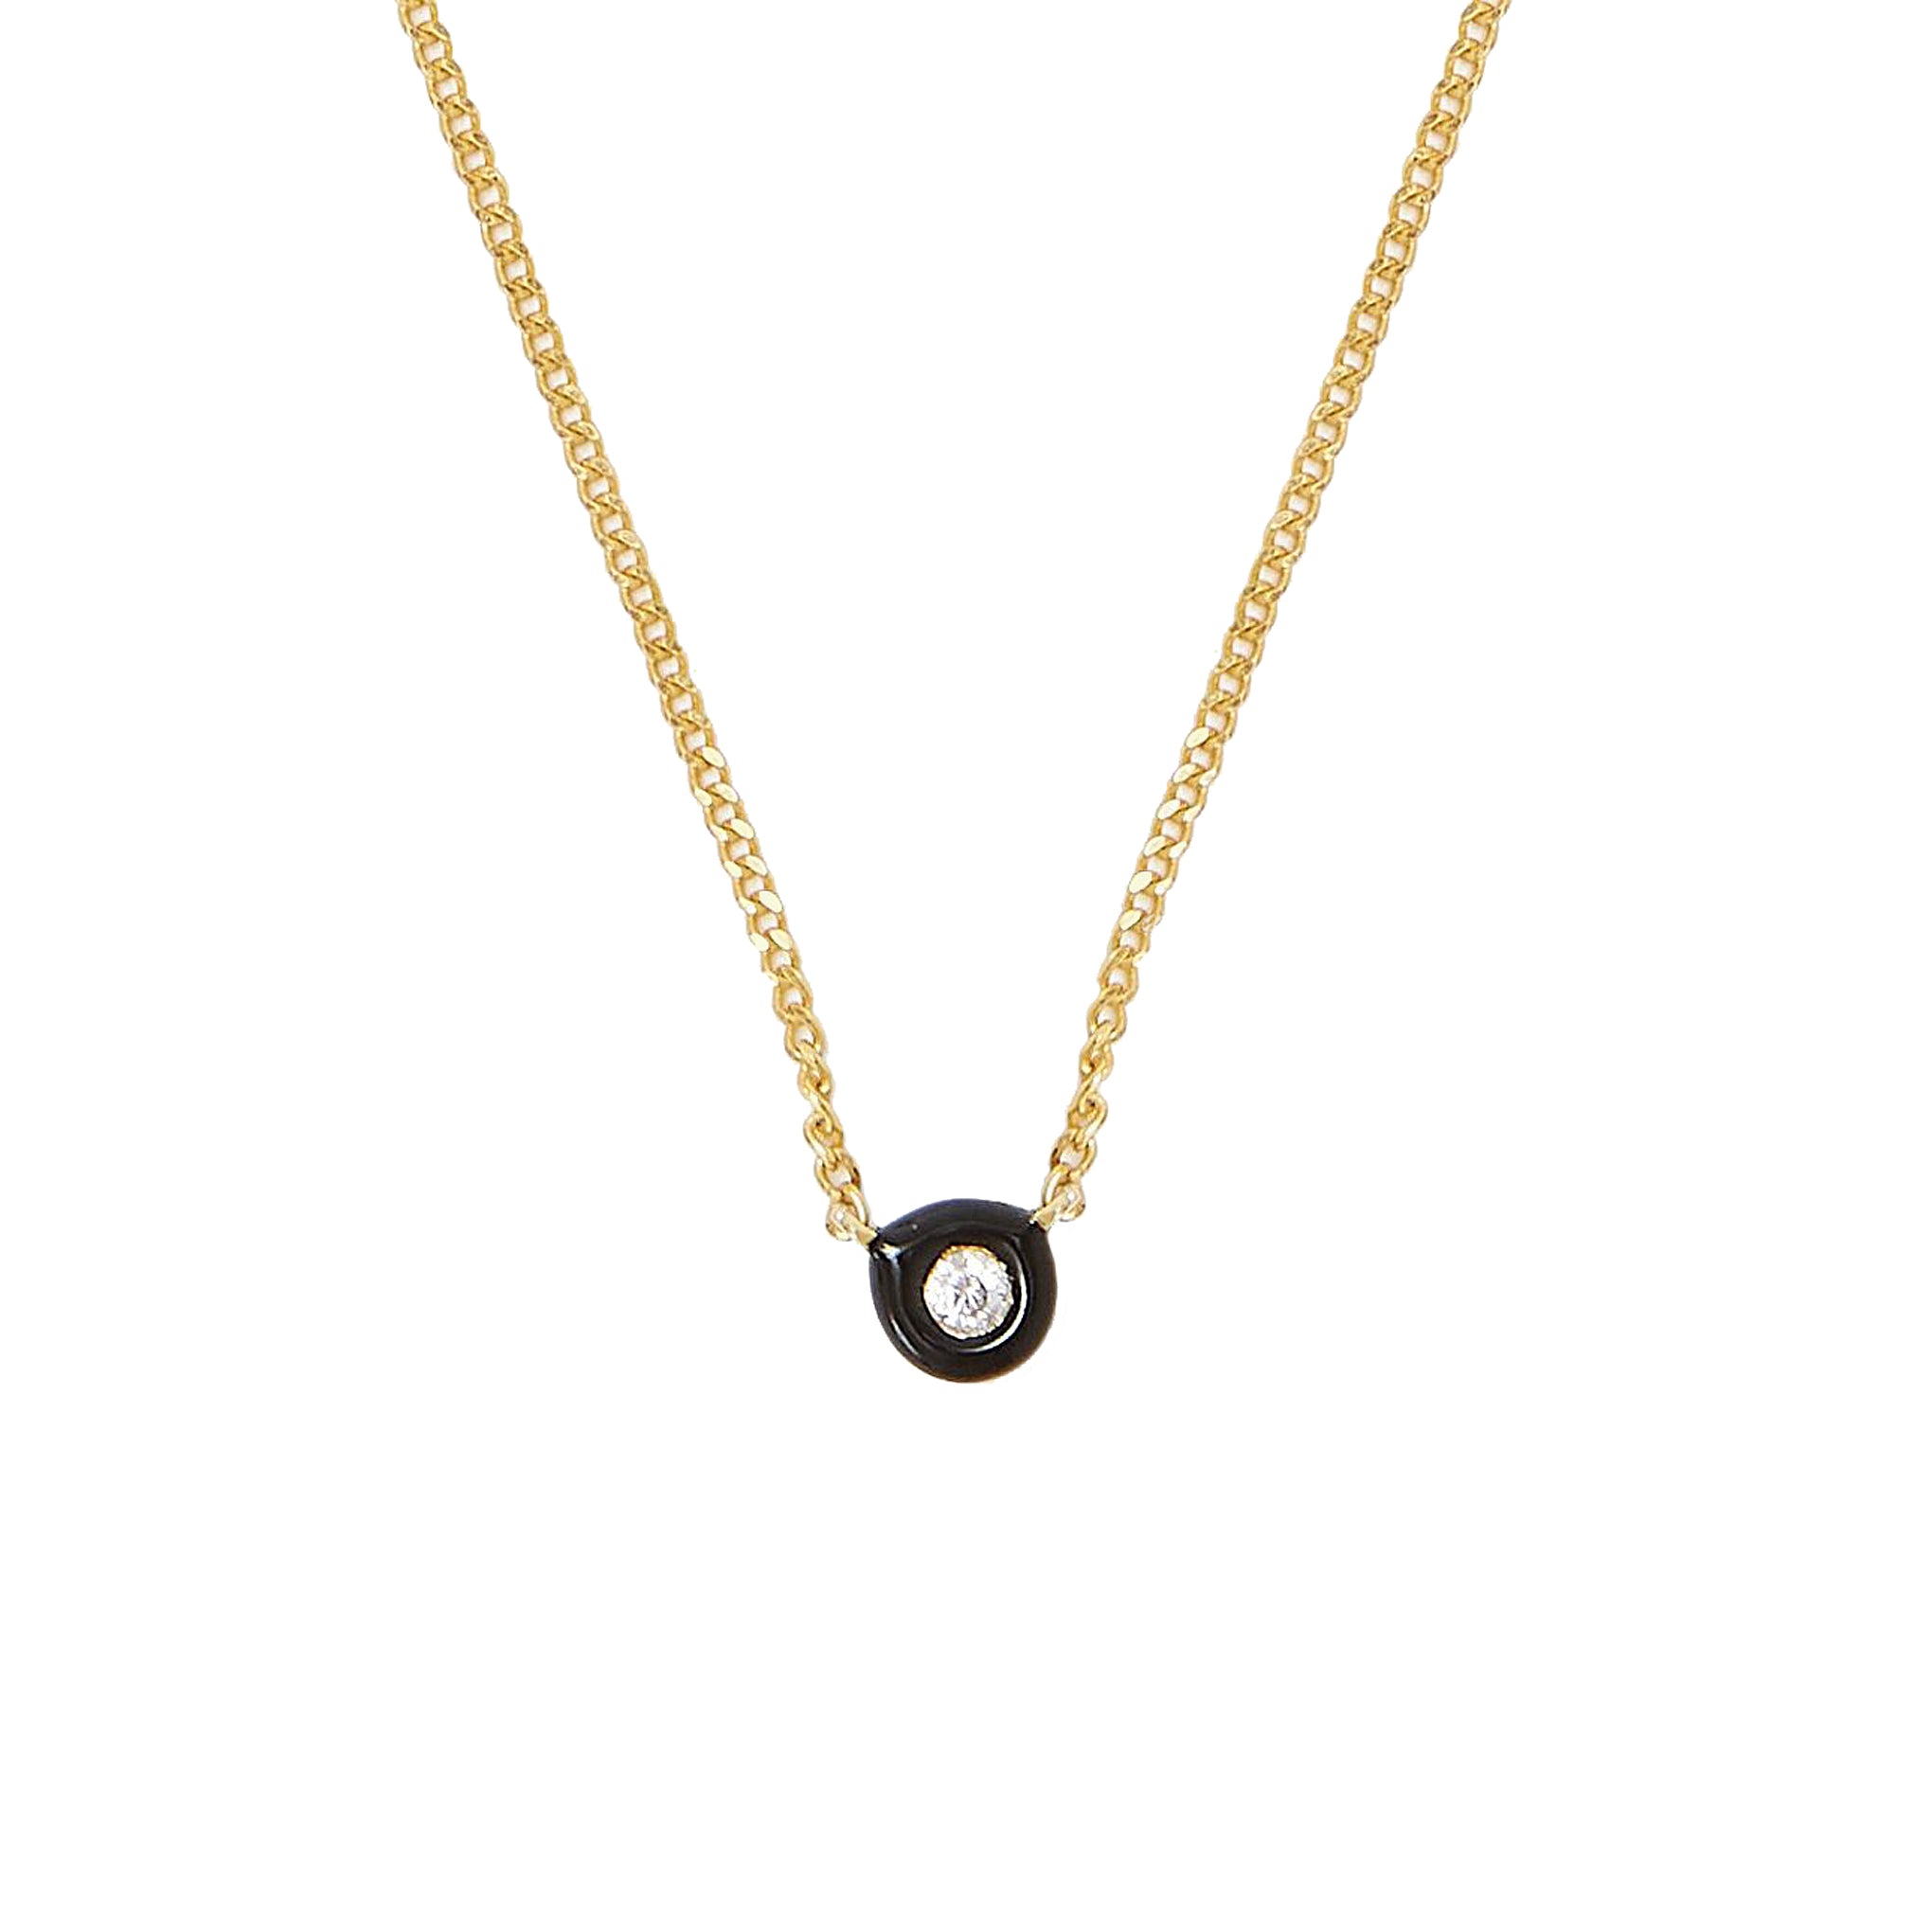 Chan Luu Bezel Set Diamond Pendant Necklace in Black Enamel and Gold Vermeil